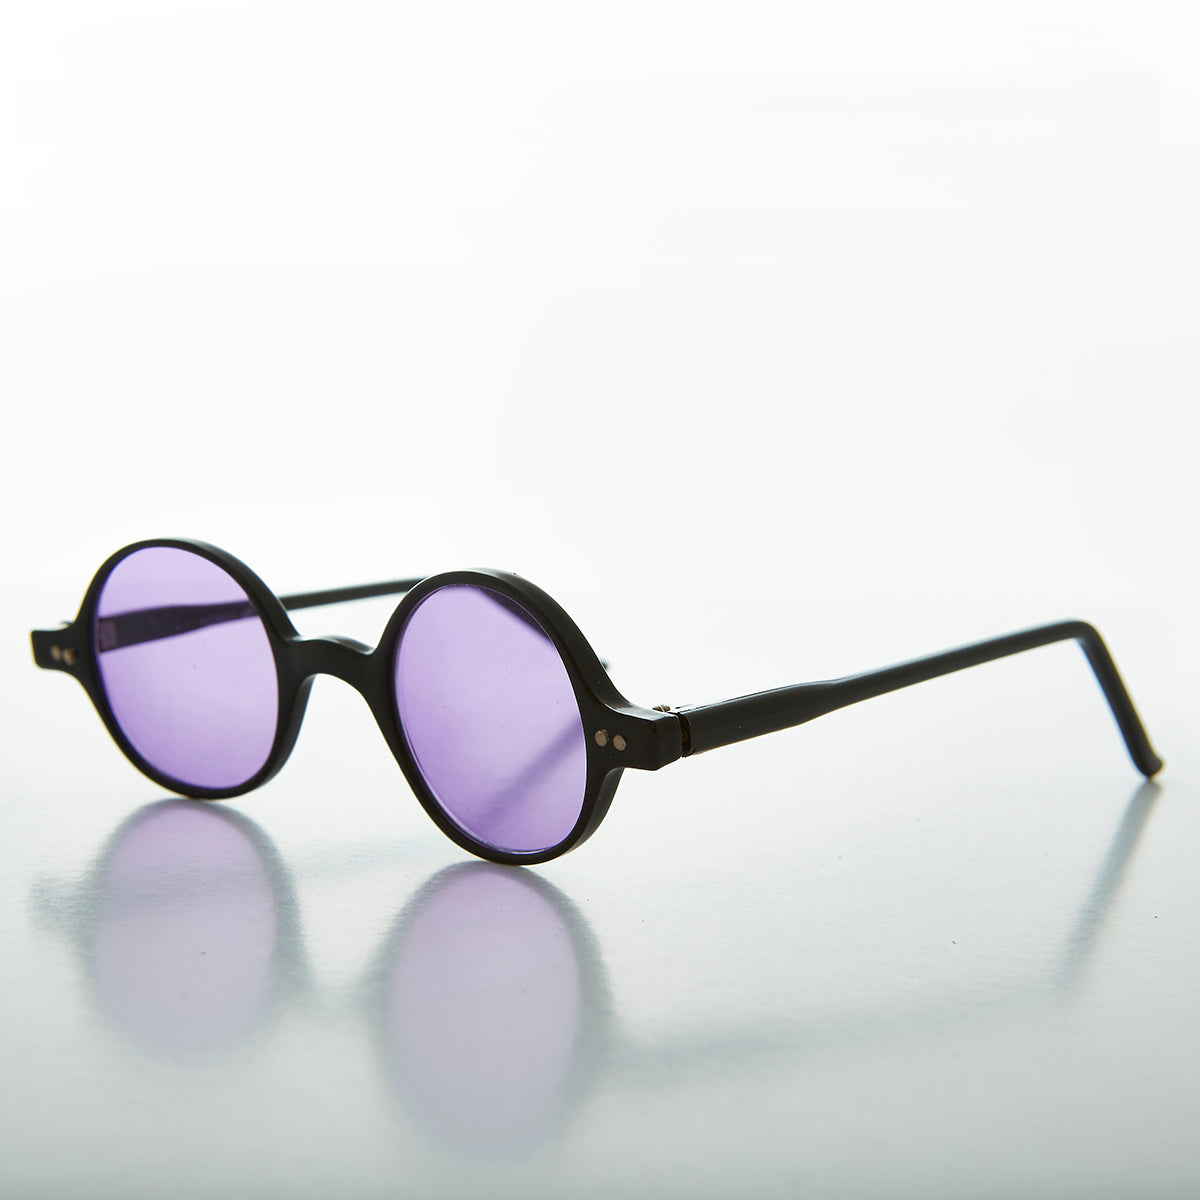 Persol Asian Fit|polarized Uv400 Sunglasses For Men & Women - Retro Round  Frame, Anti-reflective